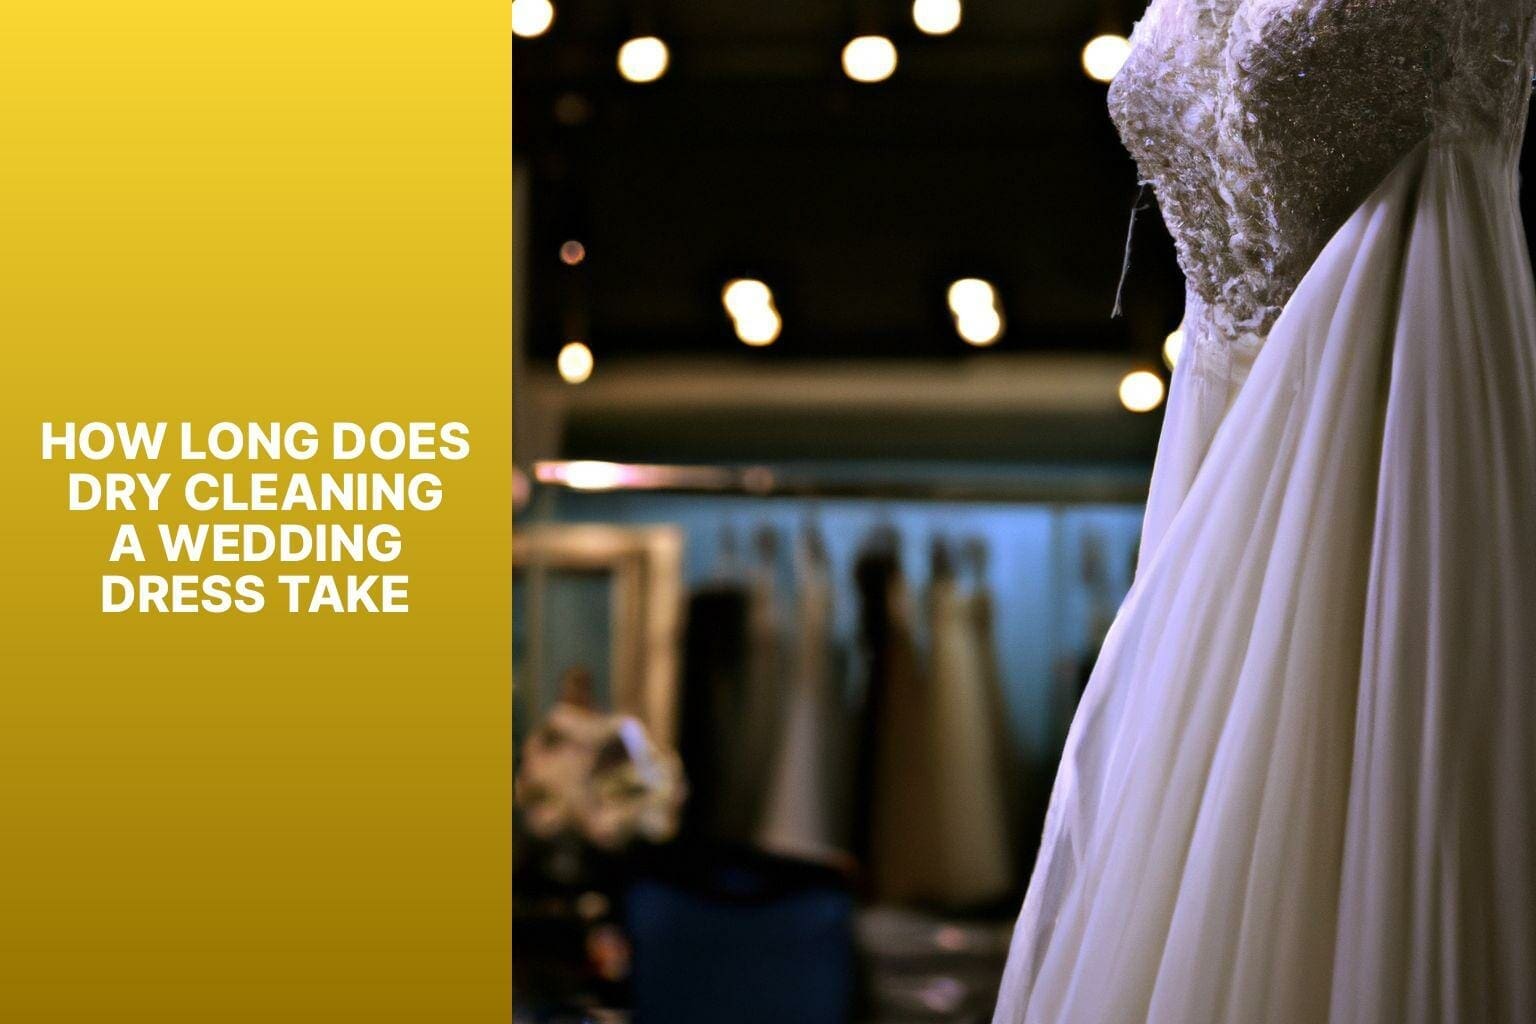 Dry cleaning, wedding dress, take.